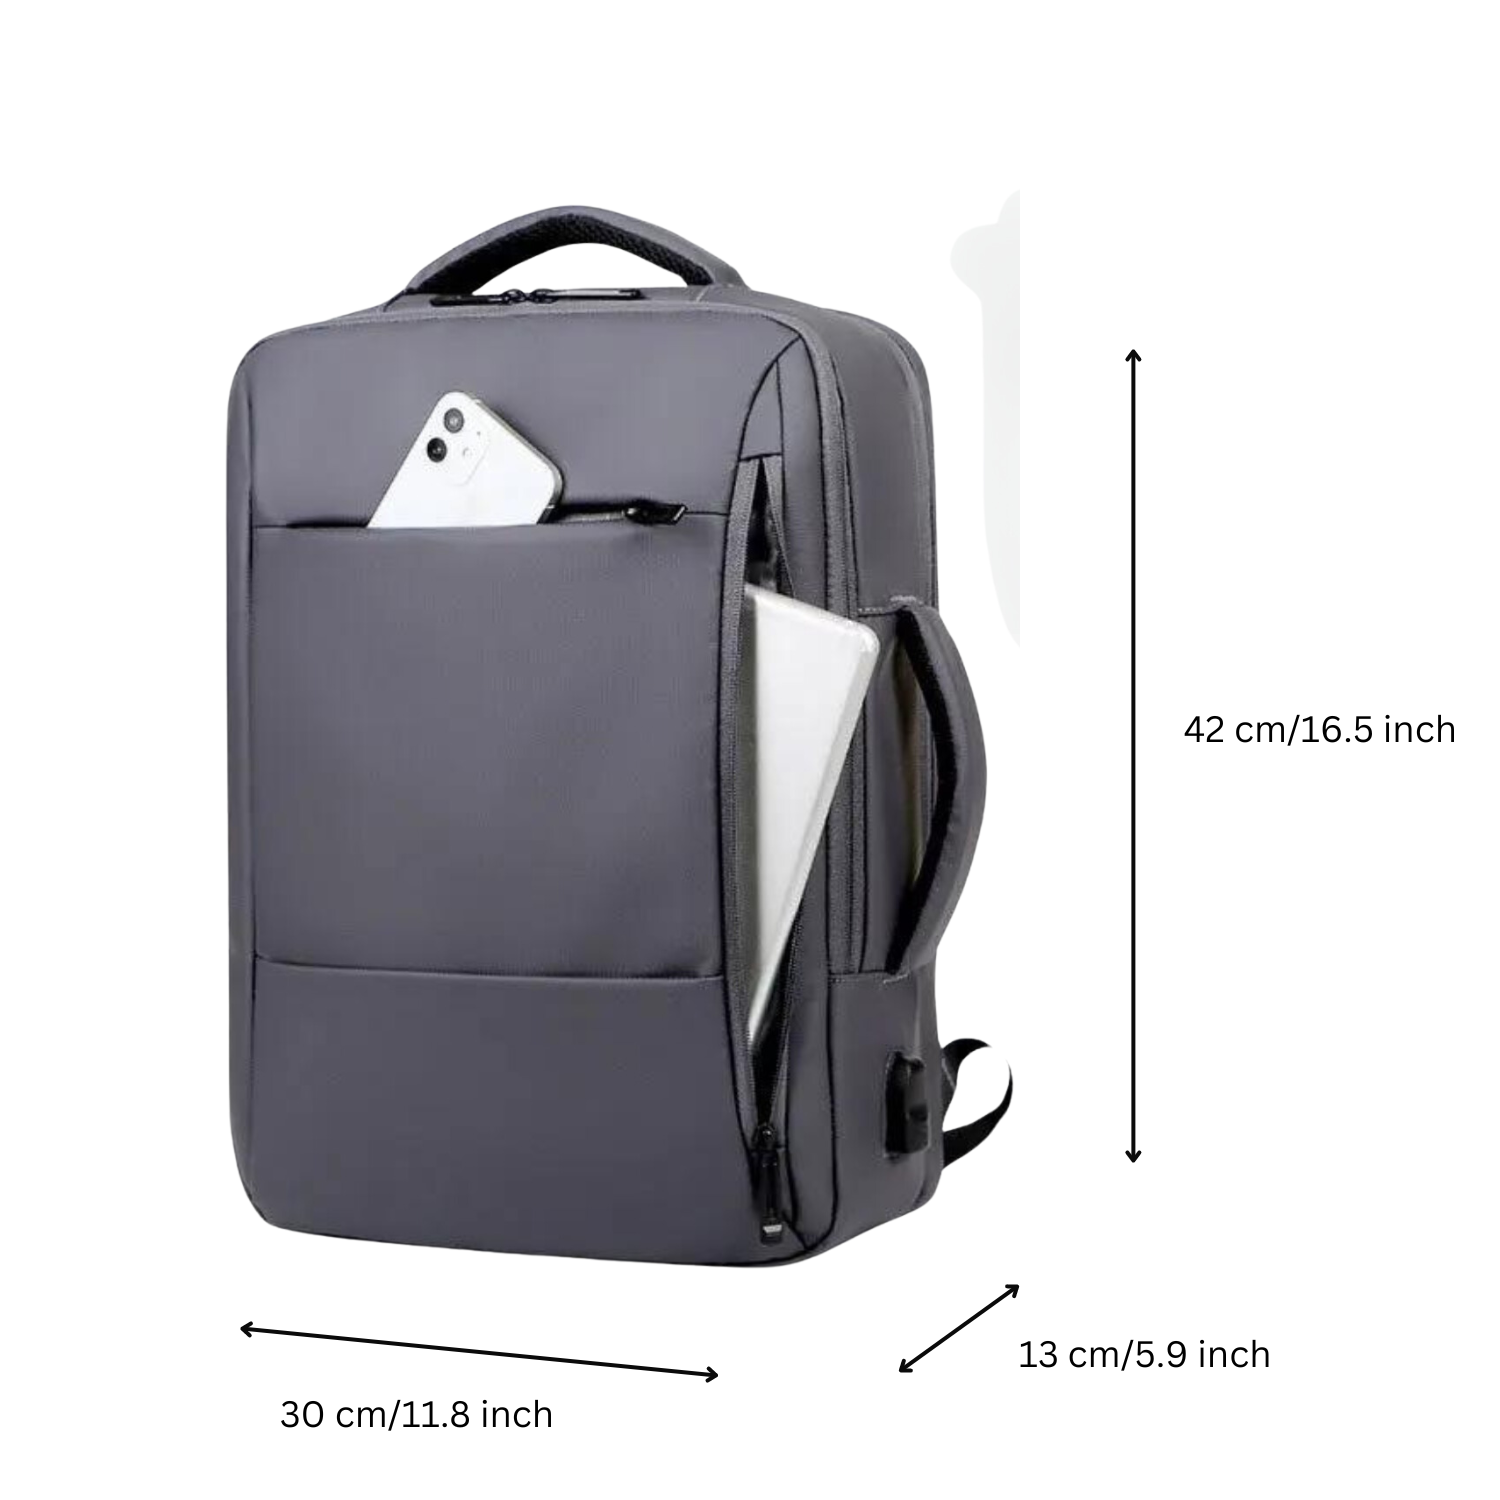 Tech-Savvy Commuter: Modern USB Charging Laptop Backpack